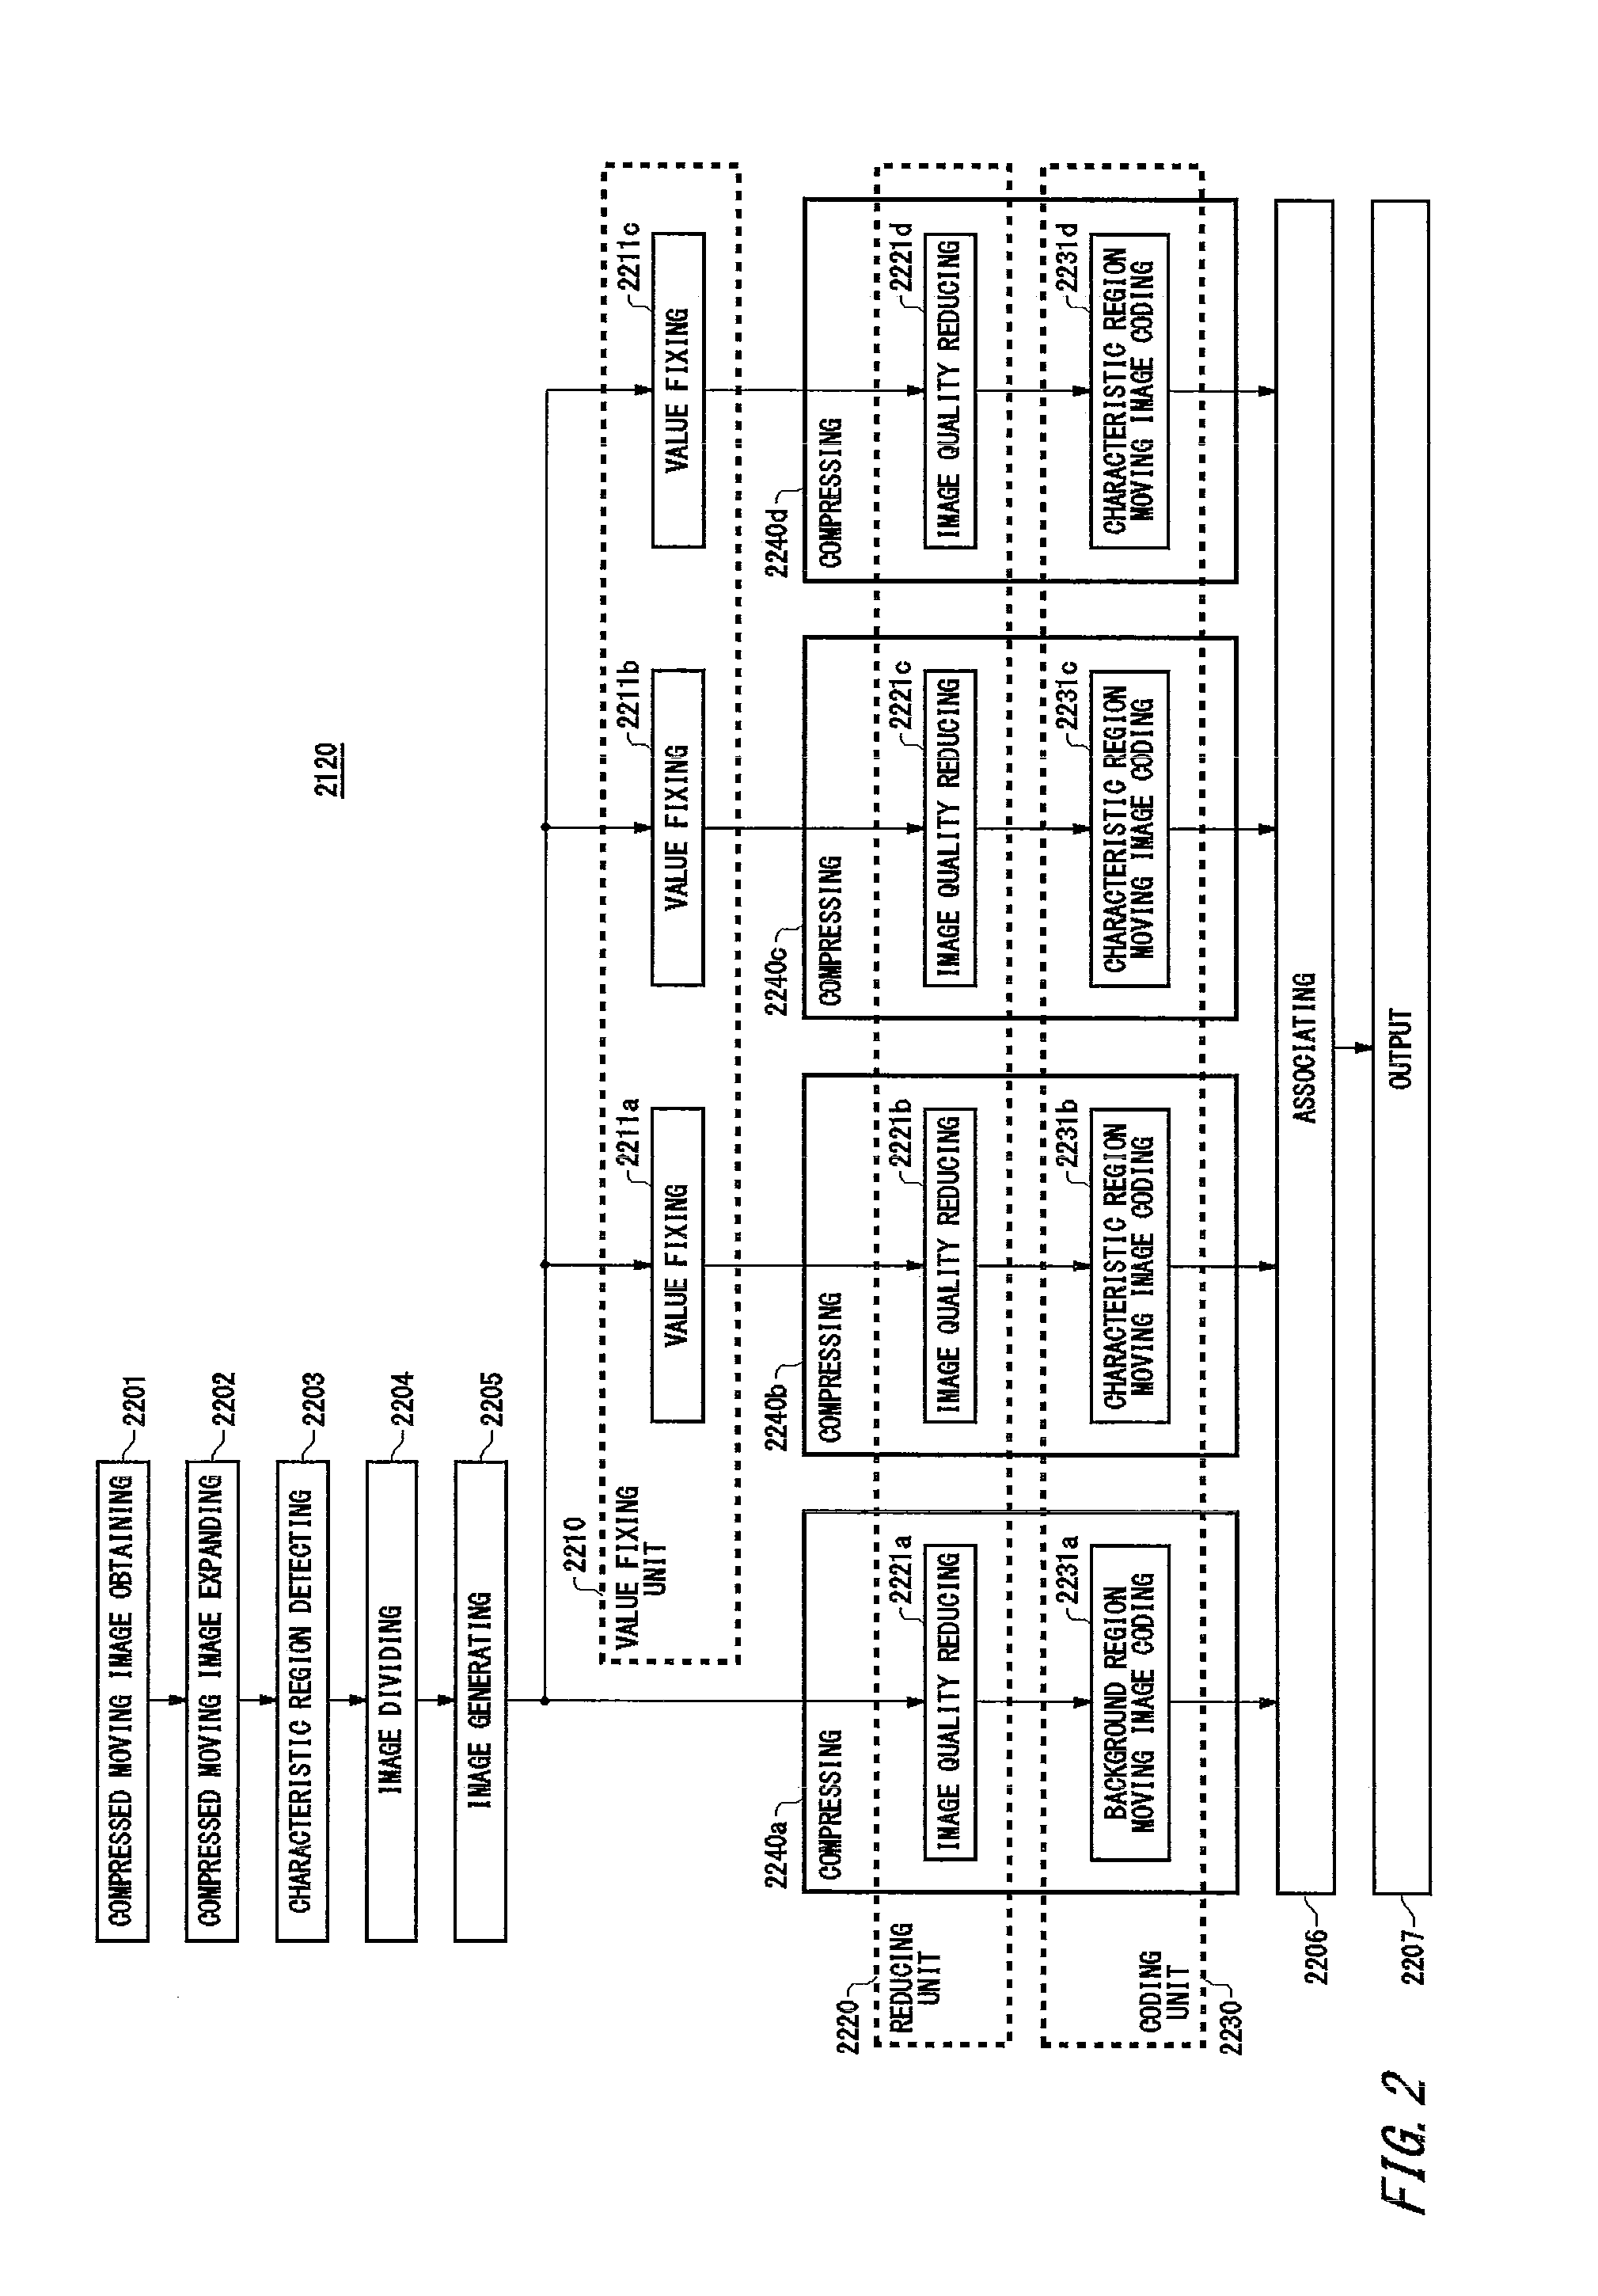 Image processing apparatus, image processing method and computer readable medium